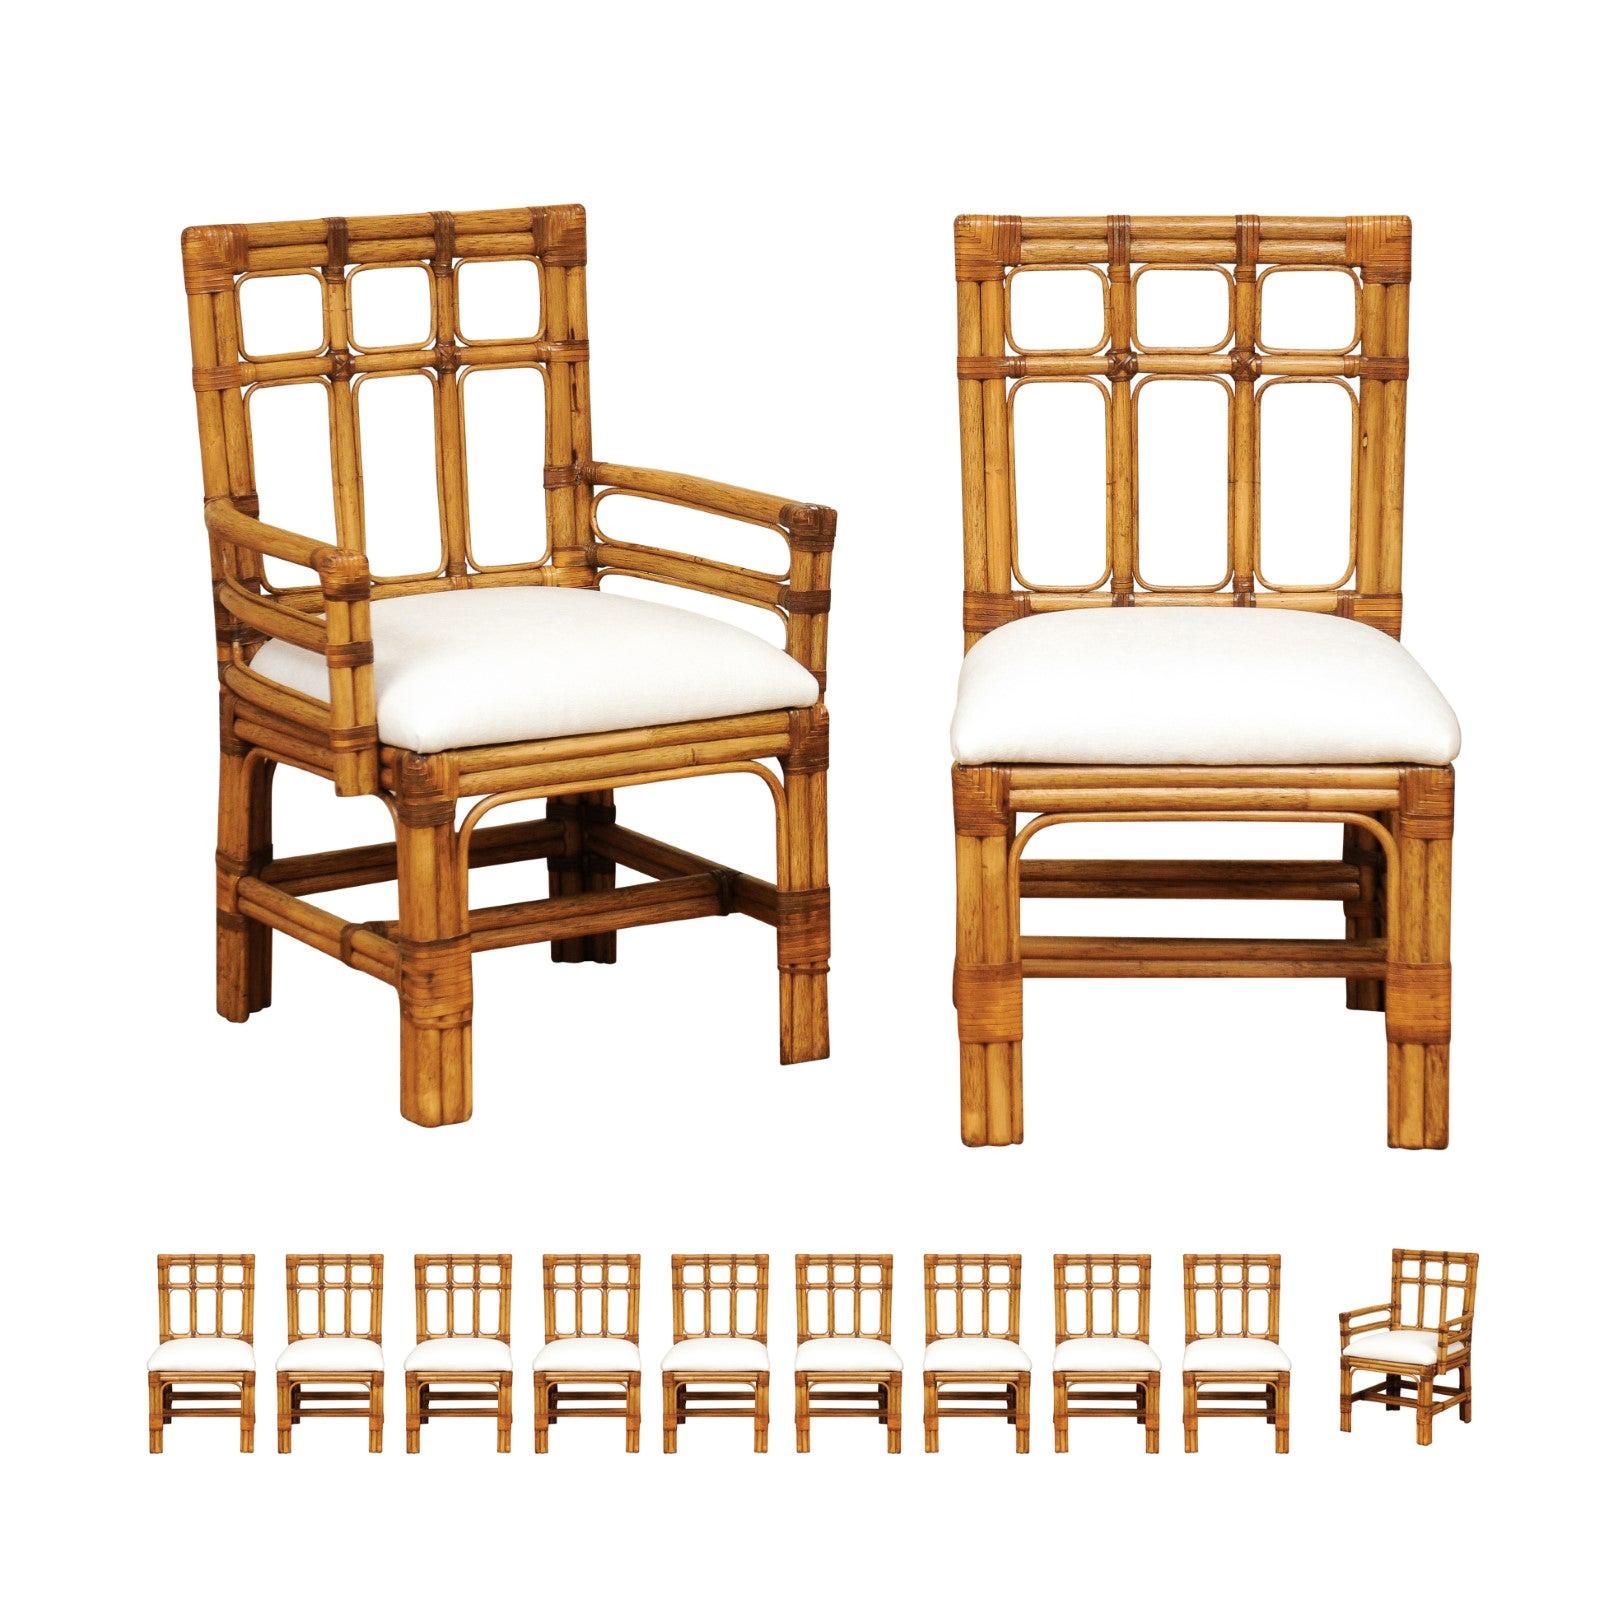 Majestic Set of 12 Greene & Greene Inspired Chairs by Brown Jordan, circa 1980 For Sale